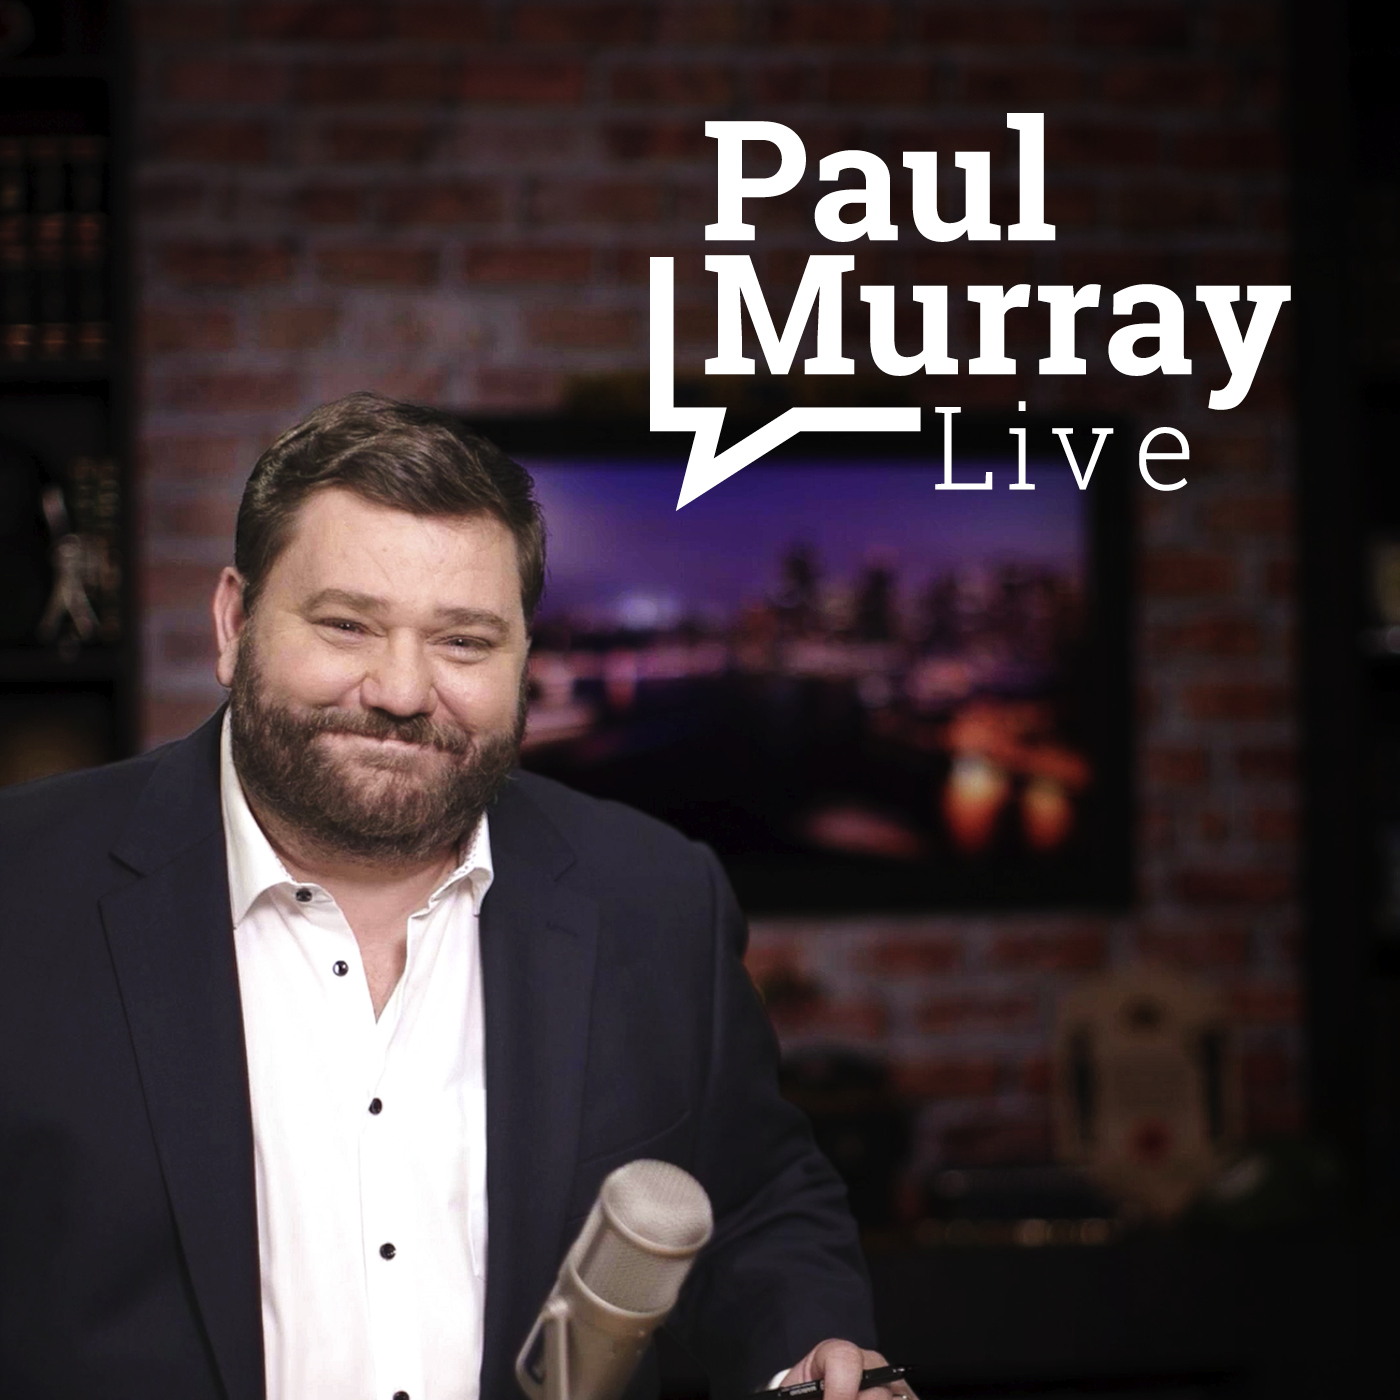 Paul Murray Live, Monday 28th February